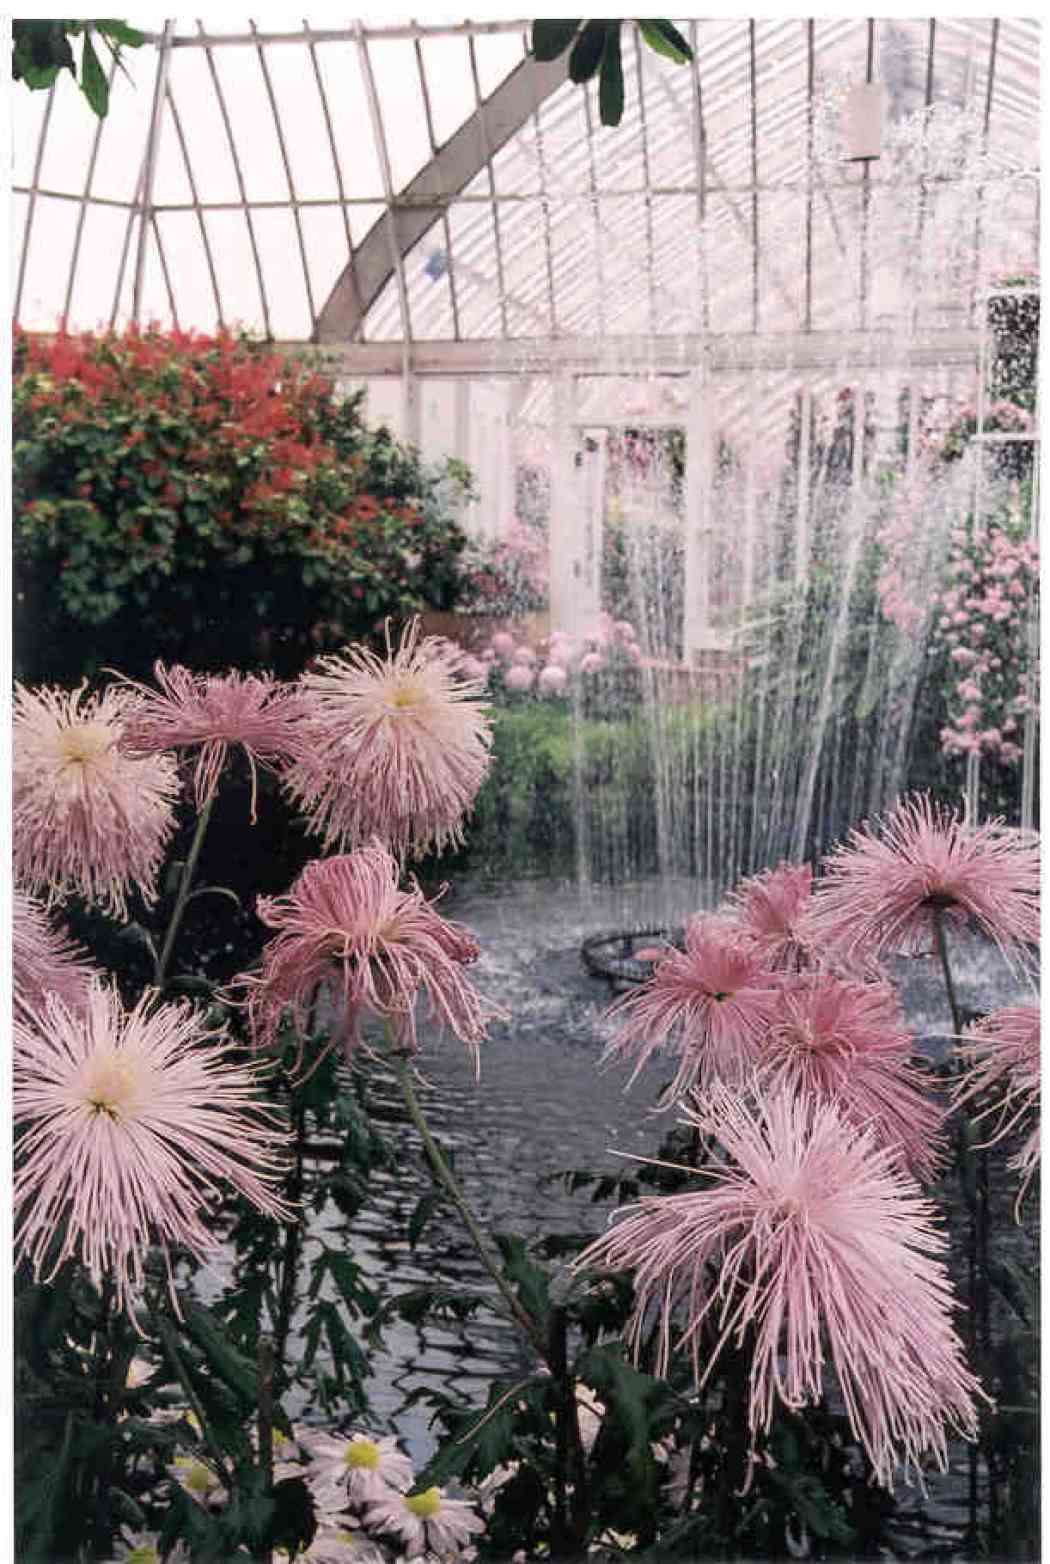 Fall Flower Show 2002: Japanese Chrysanthemum Festival